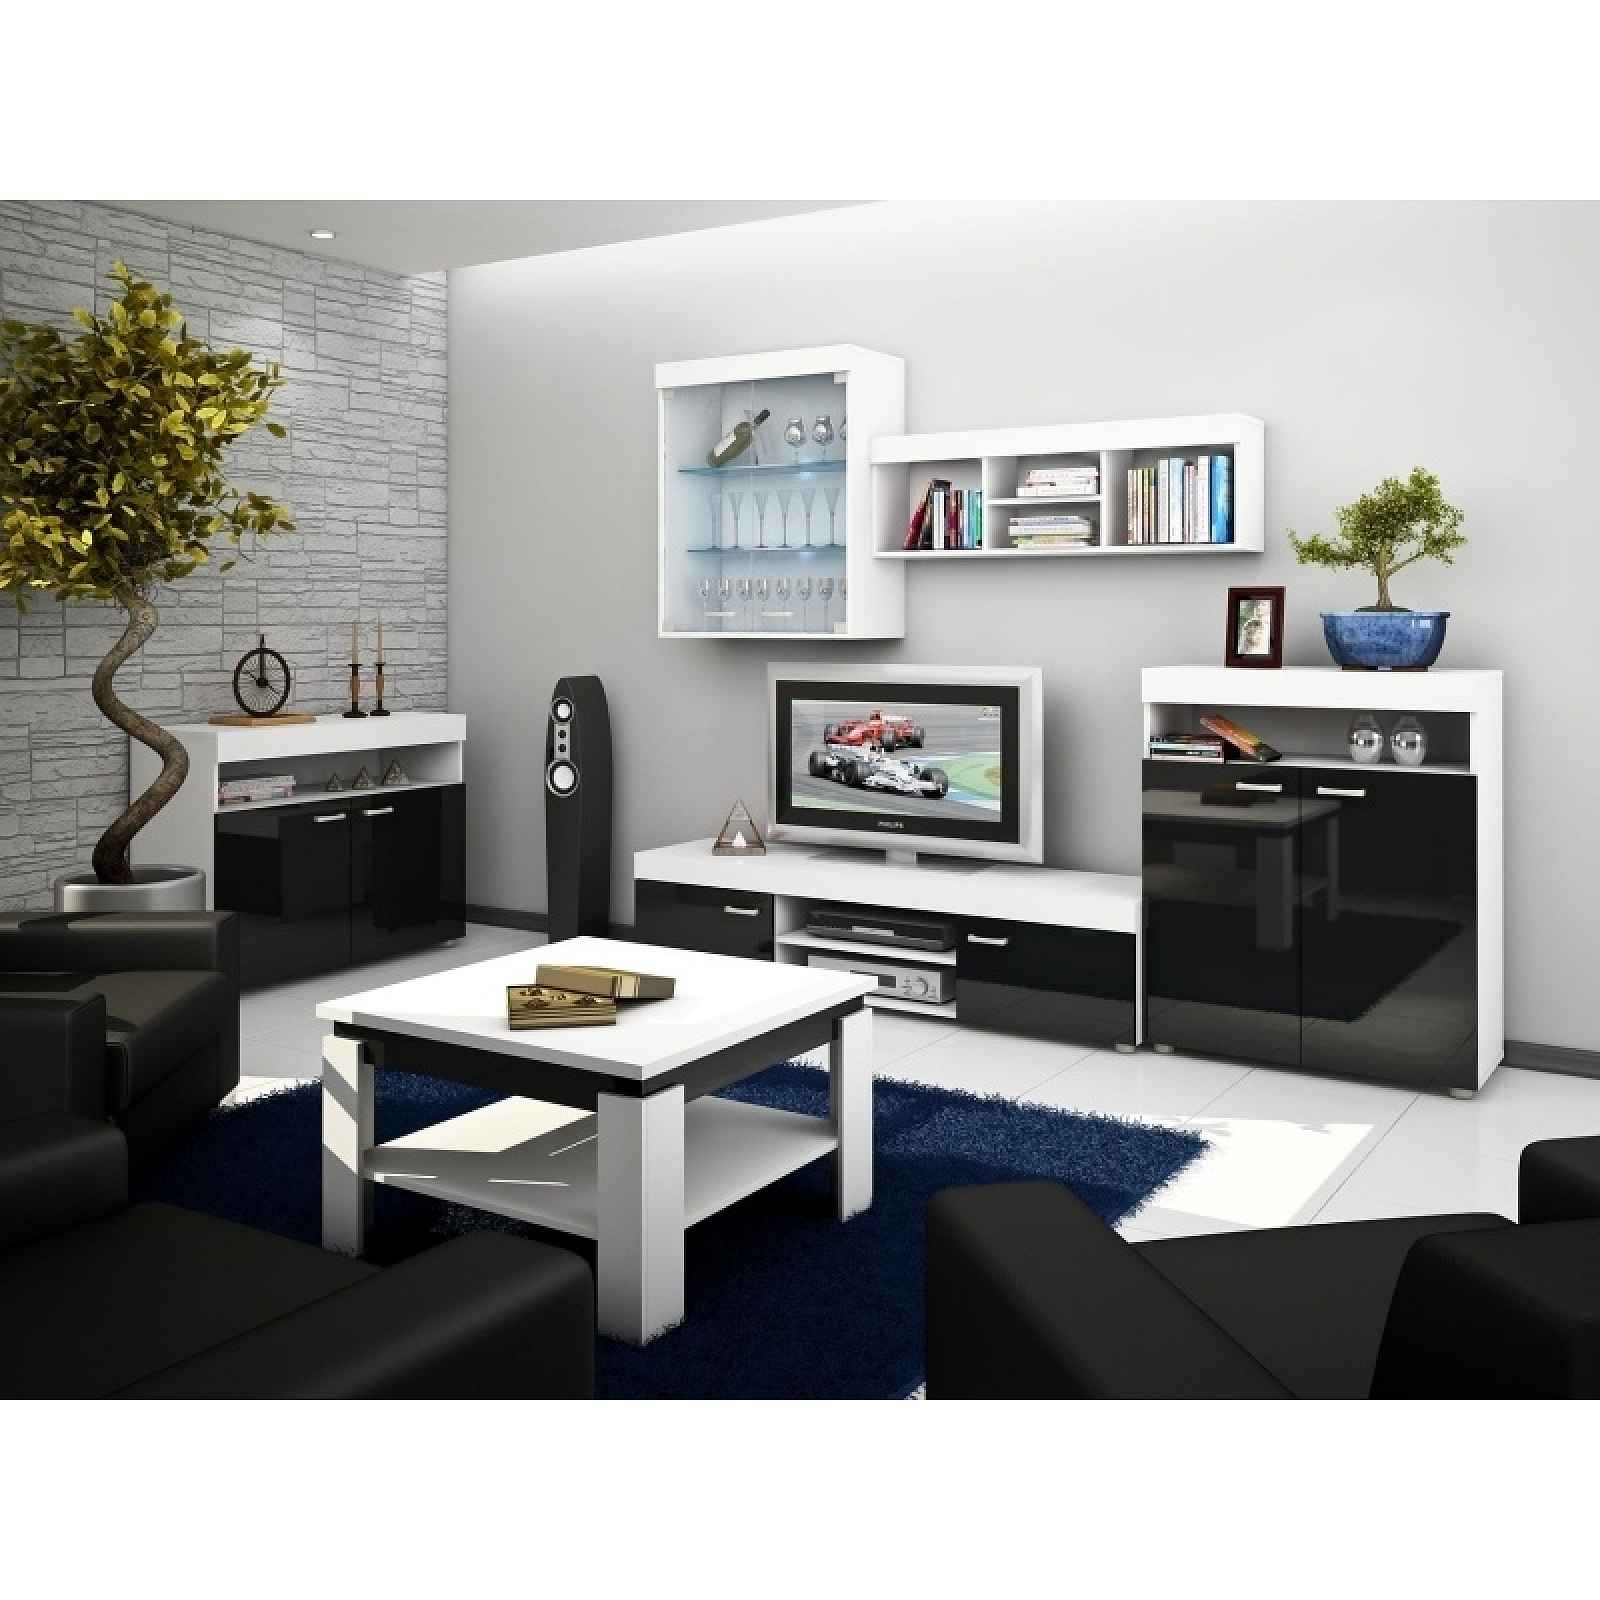 Obývací stěna MAXX, barva černá/bílá